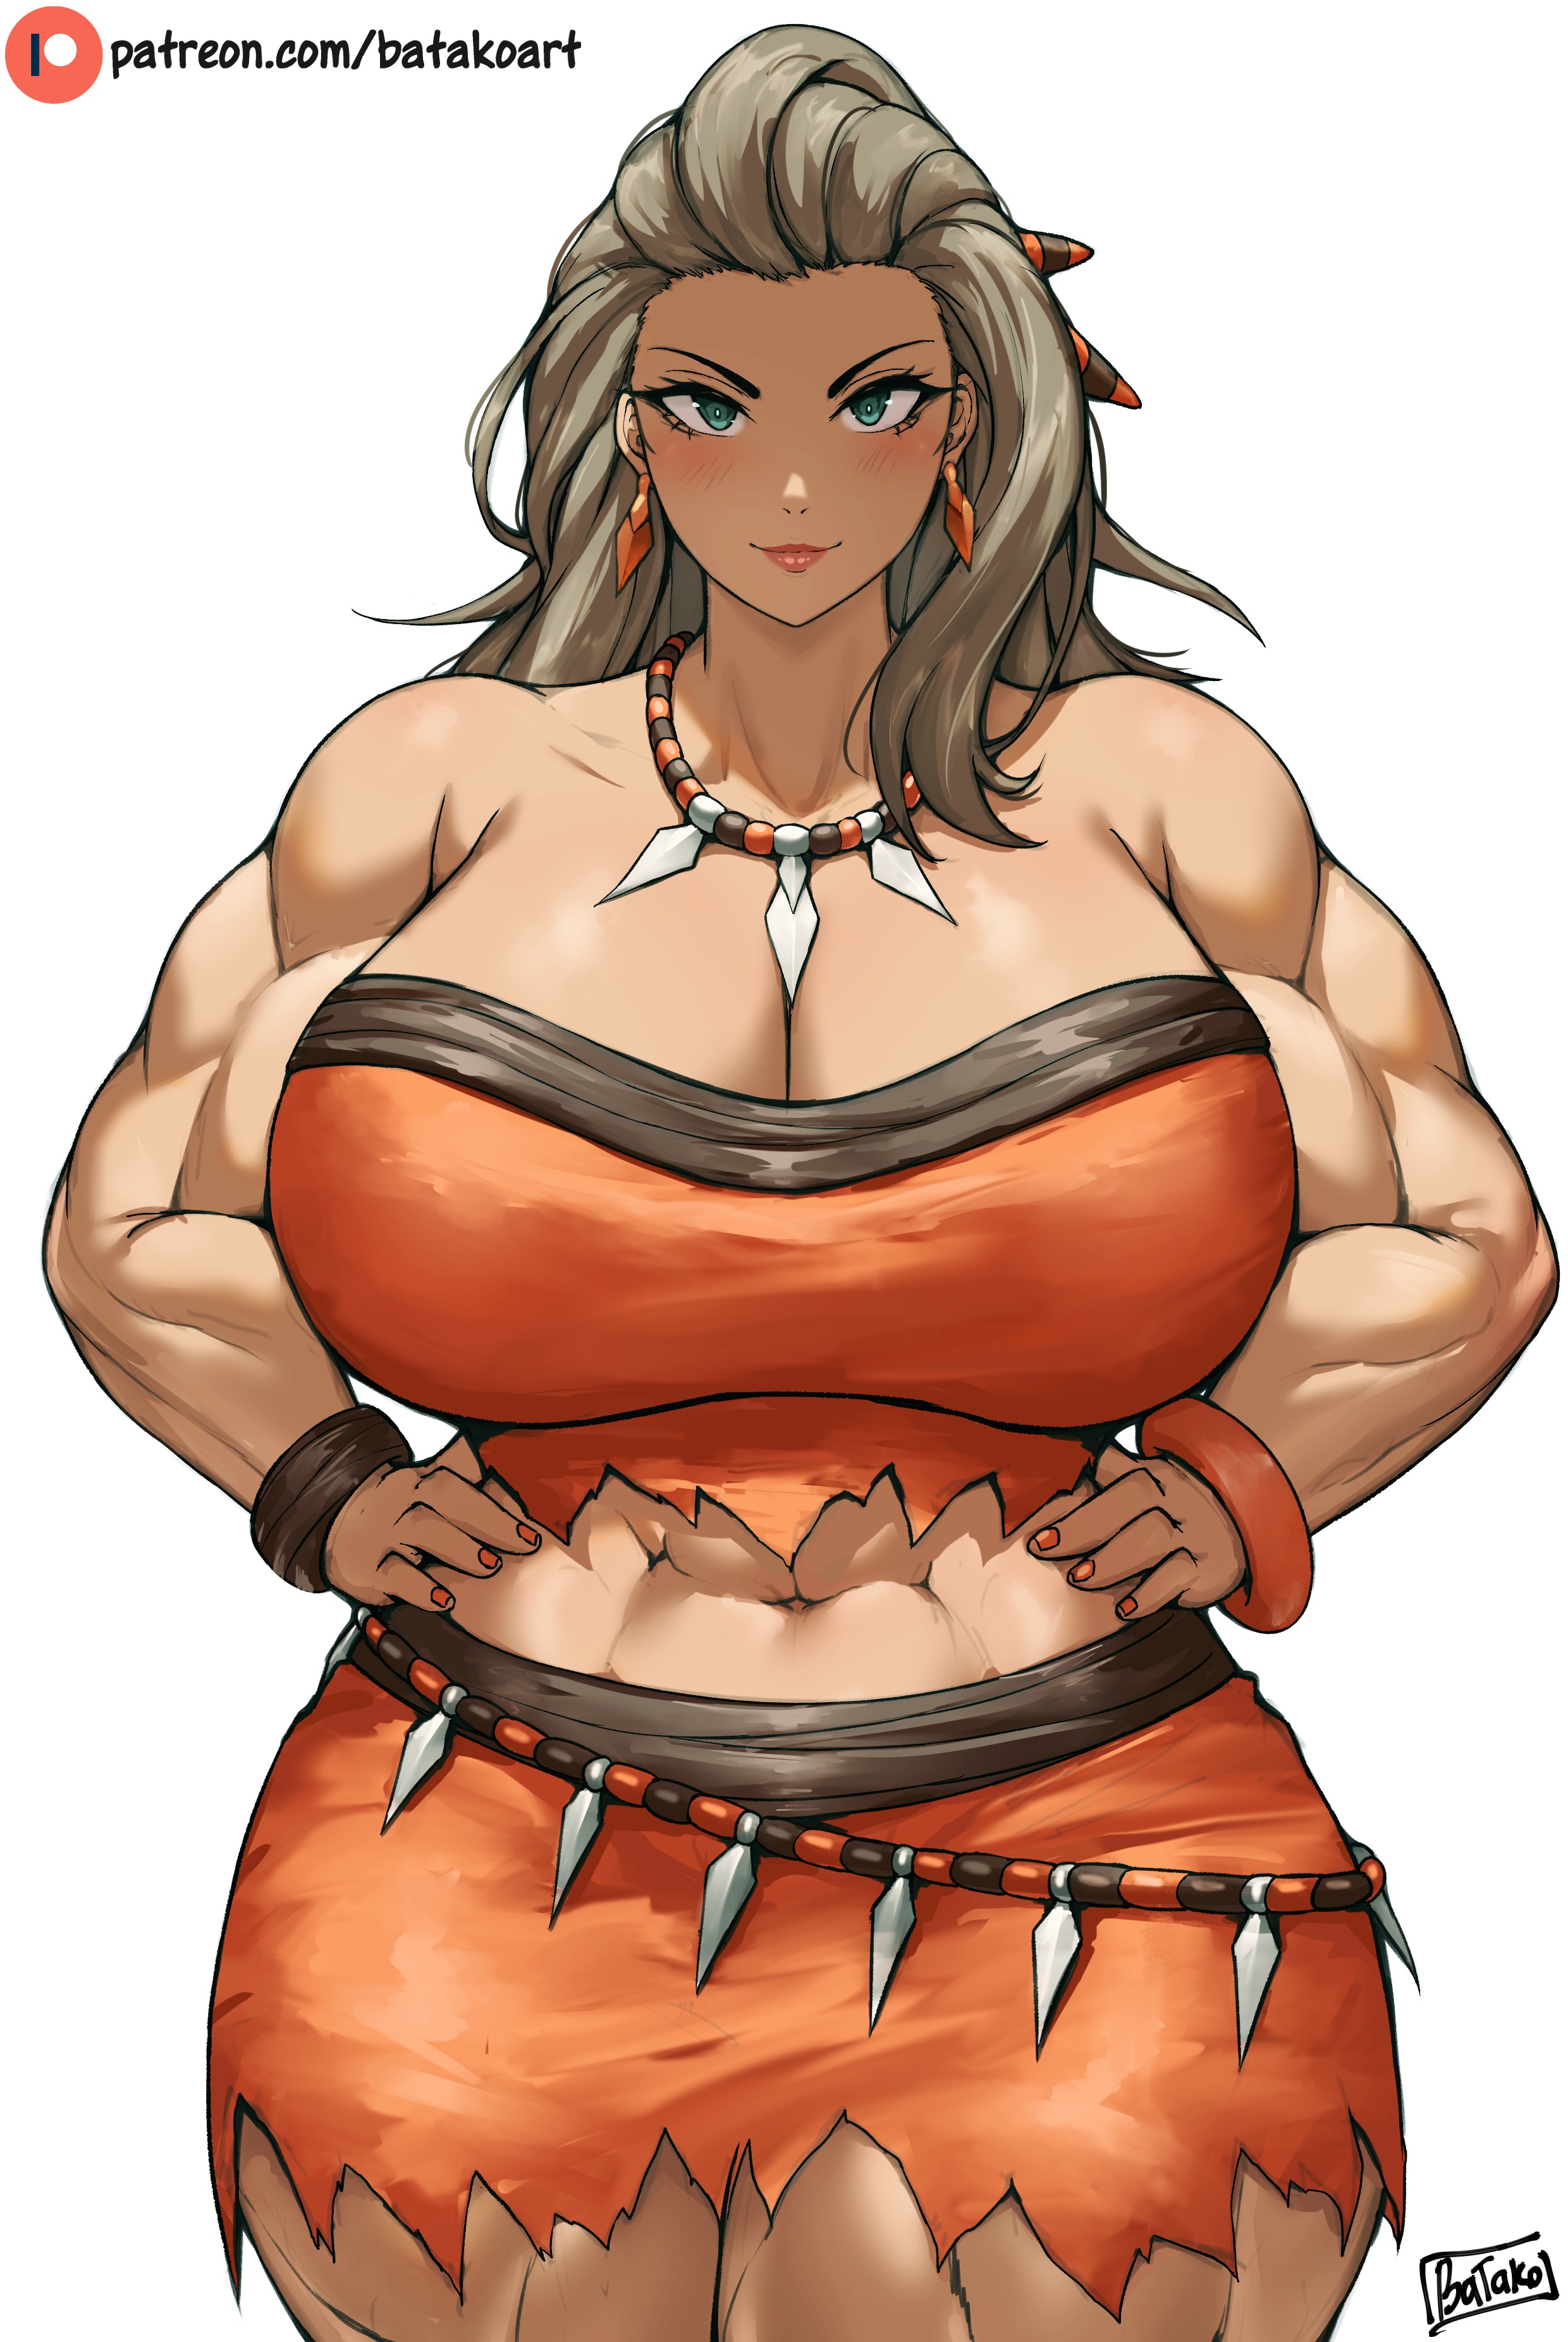 Bbw Huge Tits Hentai - Batako - Busty Big Girls From Pokemon Hentai - Faphaven